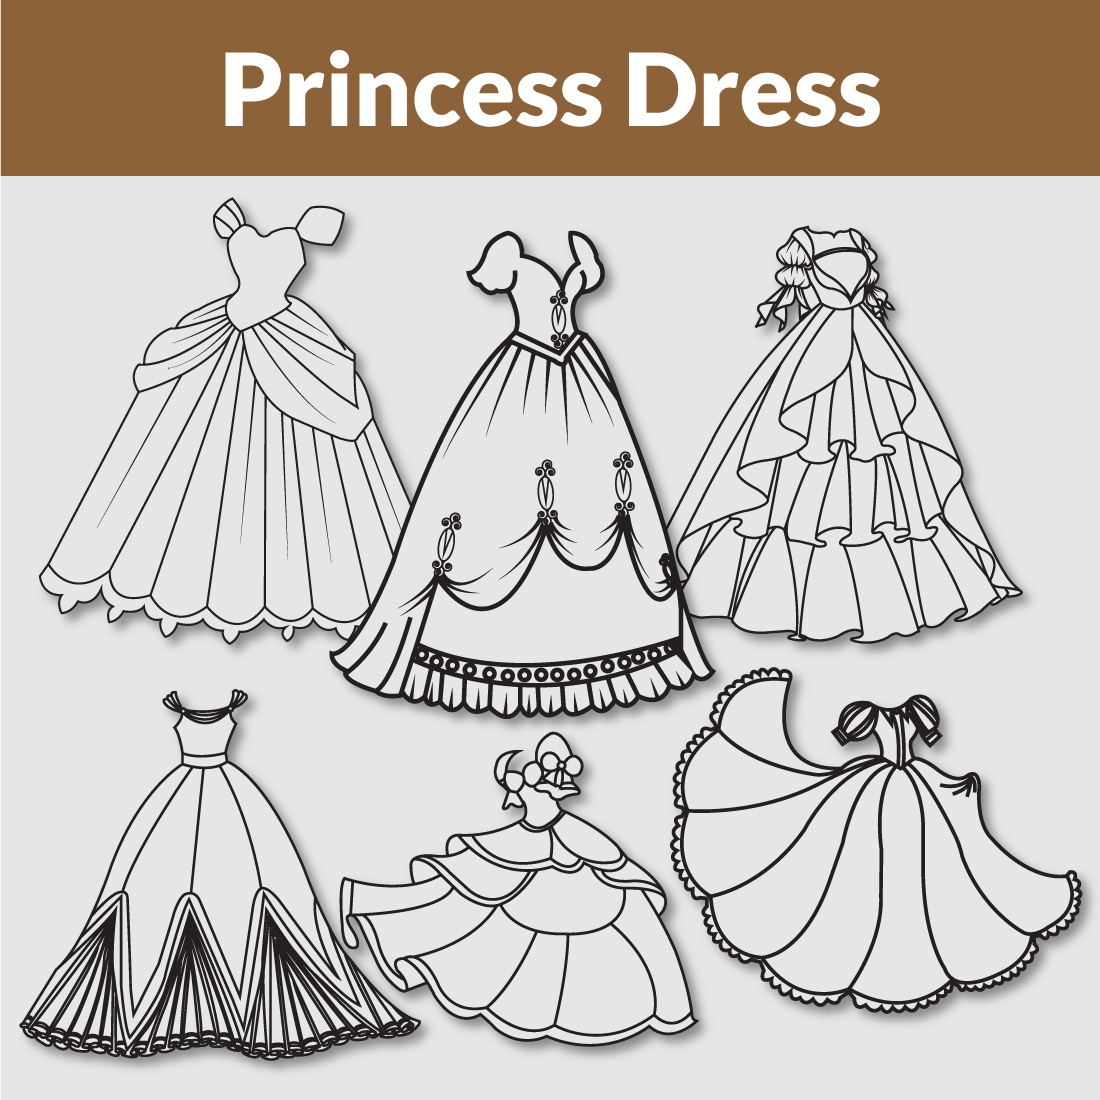 Princess Dress Coloring page Master Bundle preview image.